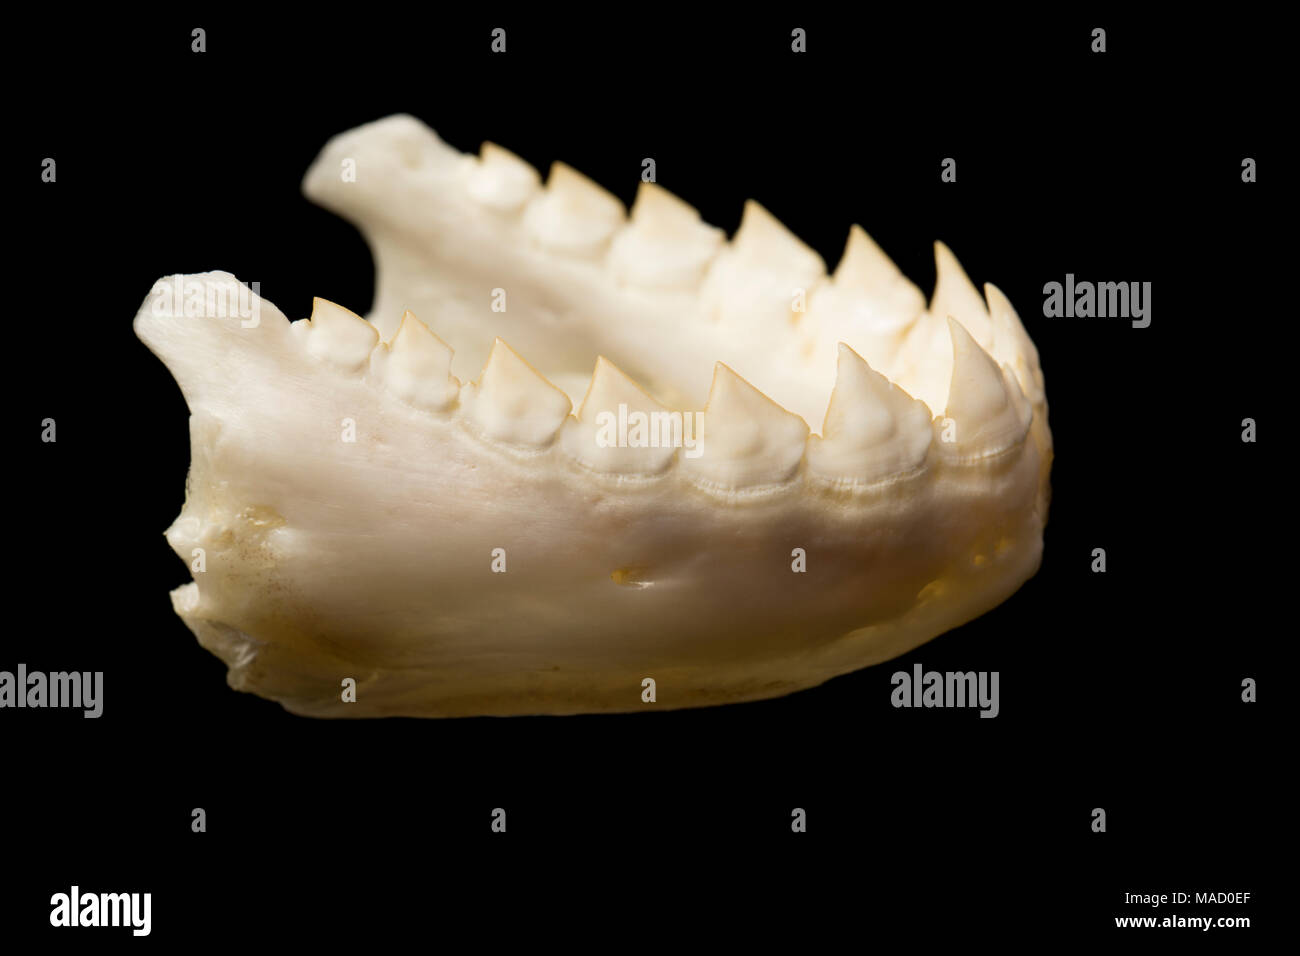 The lower jaw of a black piranha fish, Serrasalmus rhombeus, showing serrated, triangular teeth, Suriname South America. Stock Photo